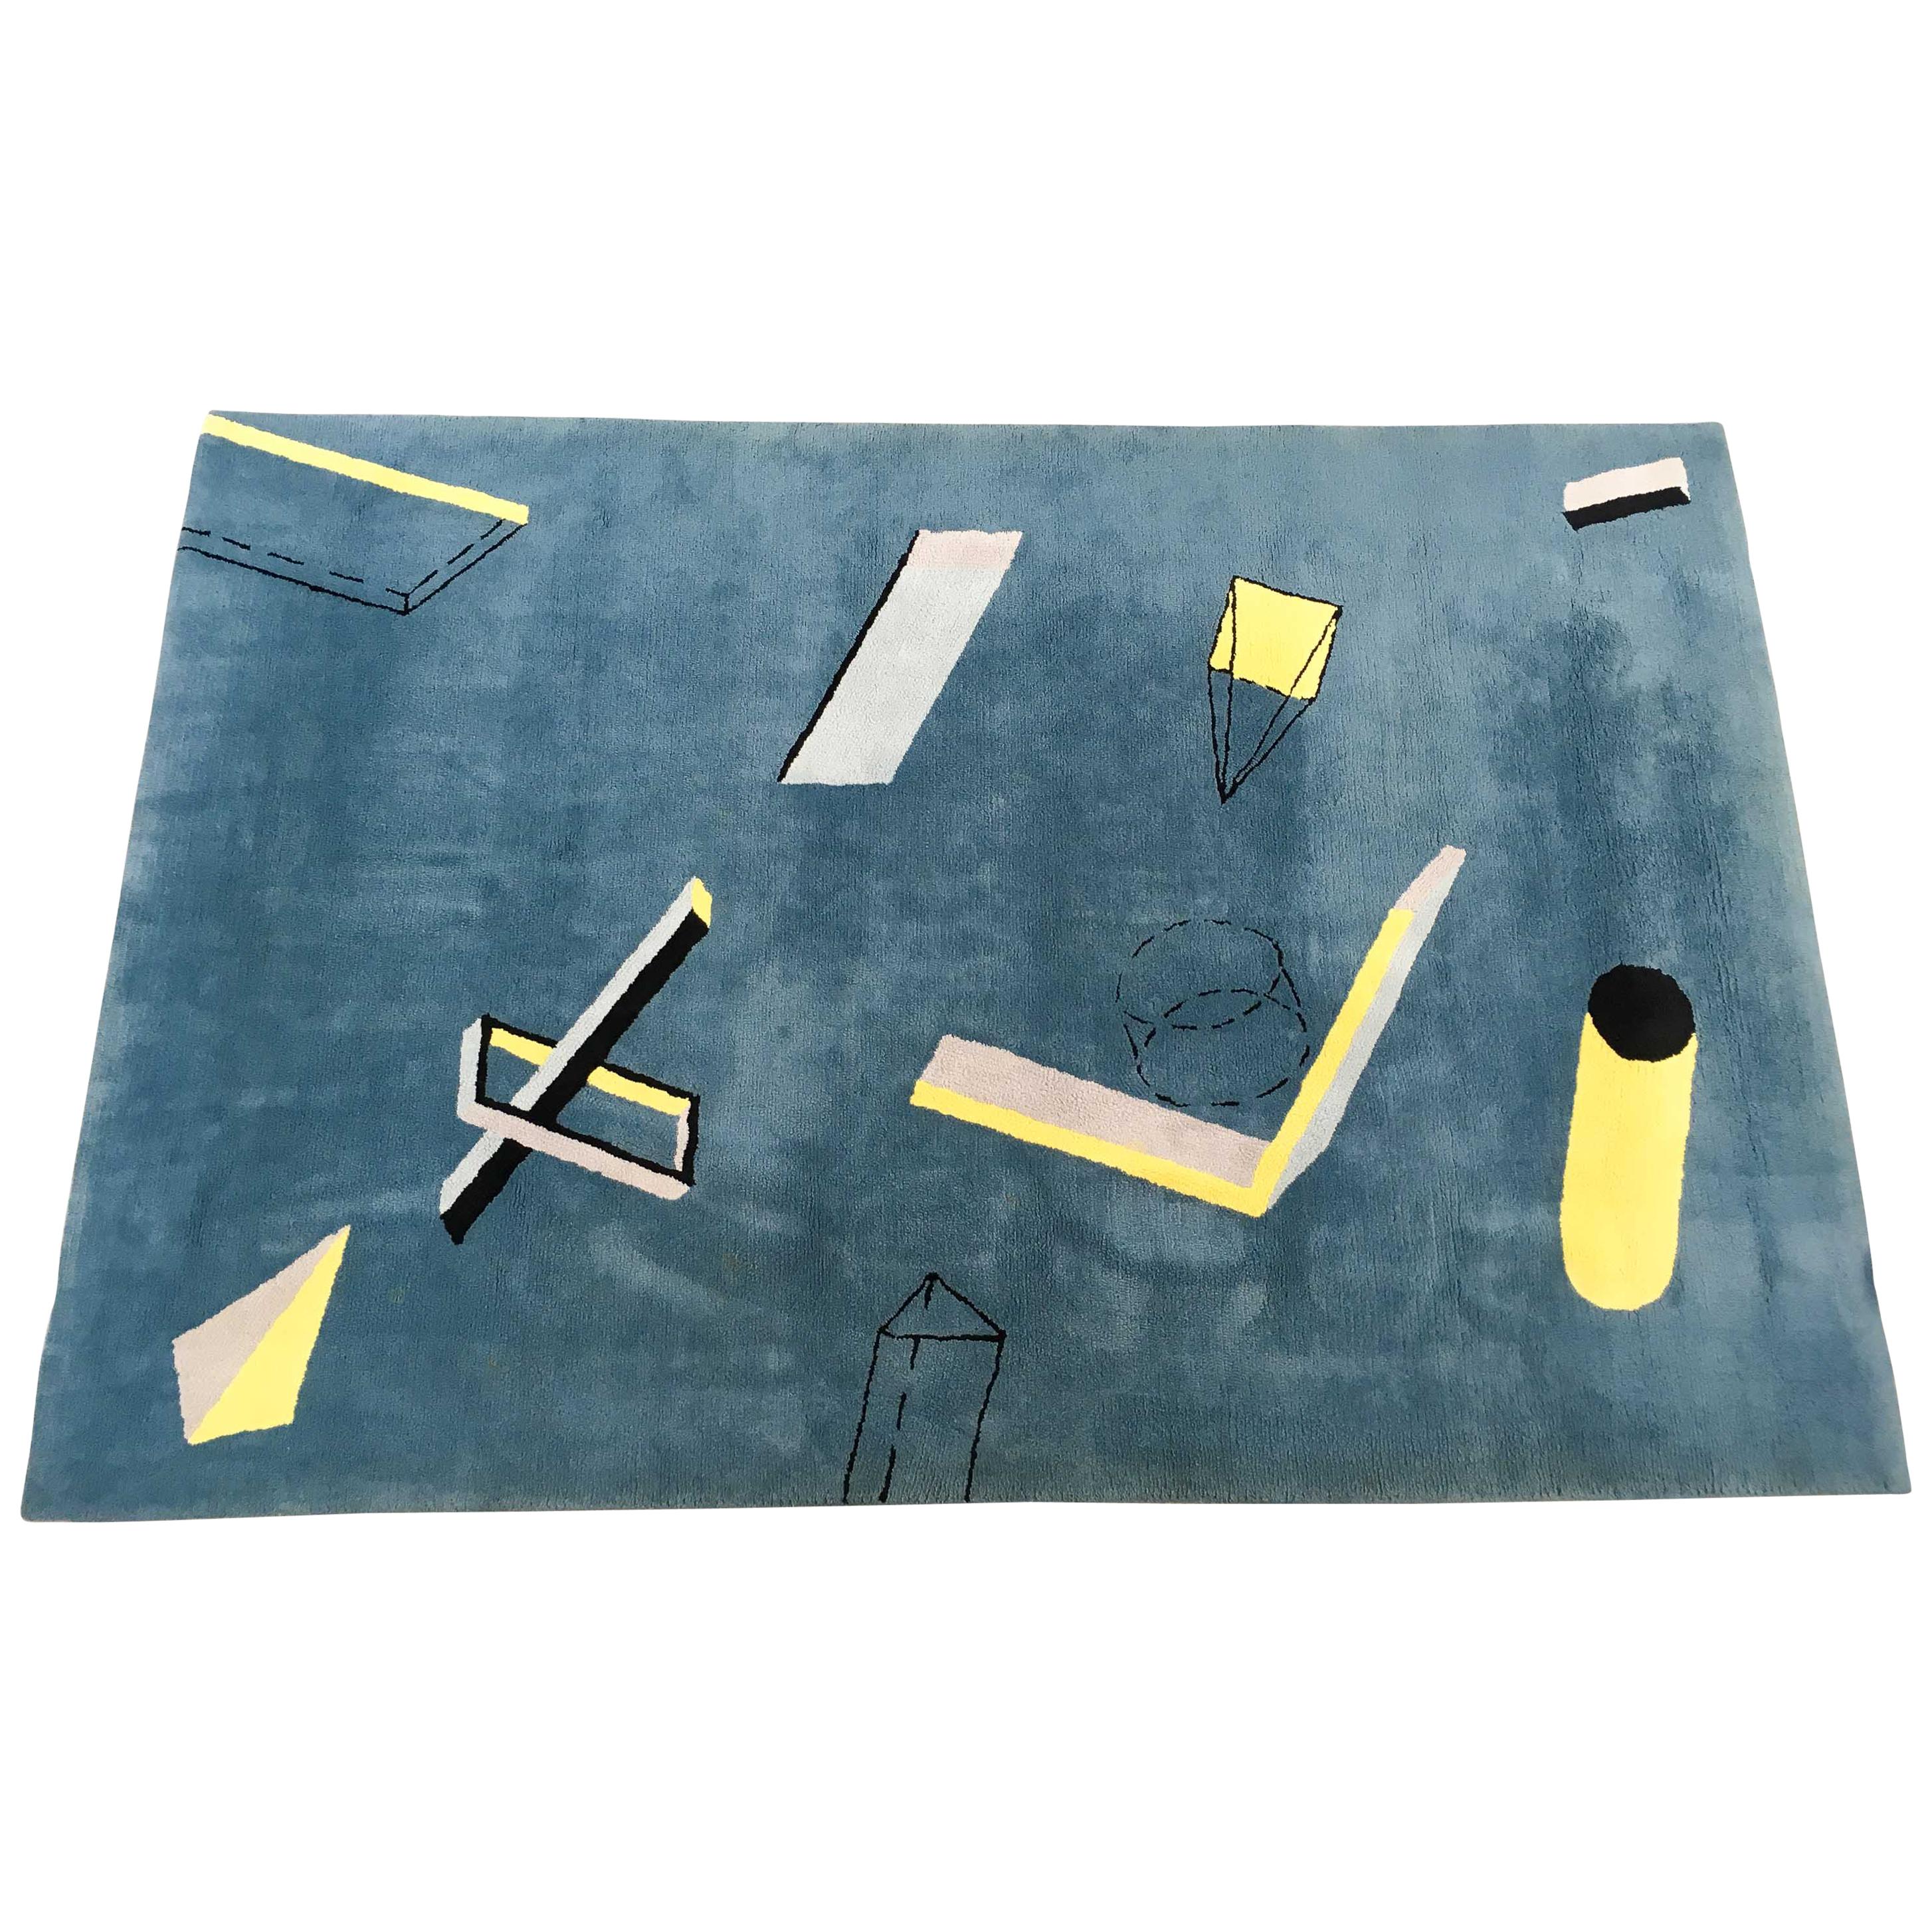 Bauhaus Memphis Art Architectural Geometric Wool Carpet/Rug, Blue Yellow Grey  For Sale